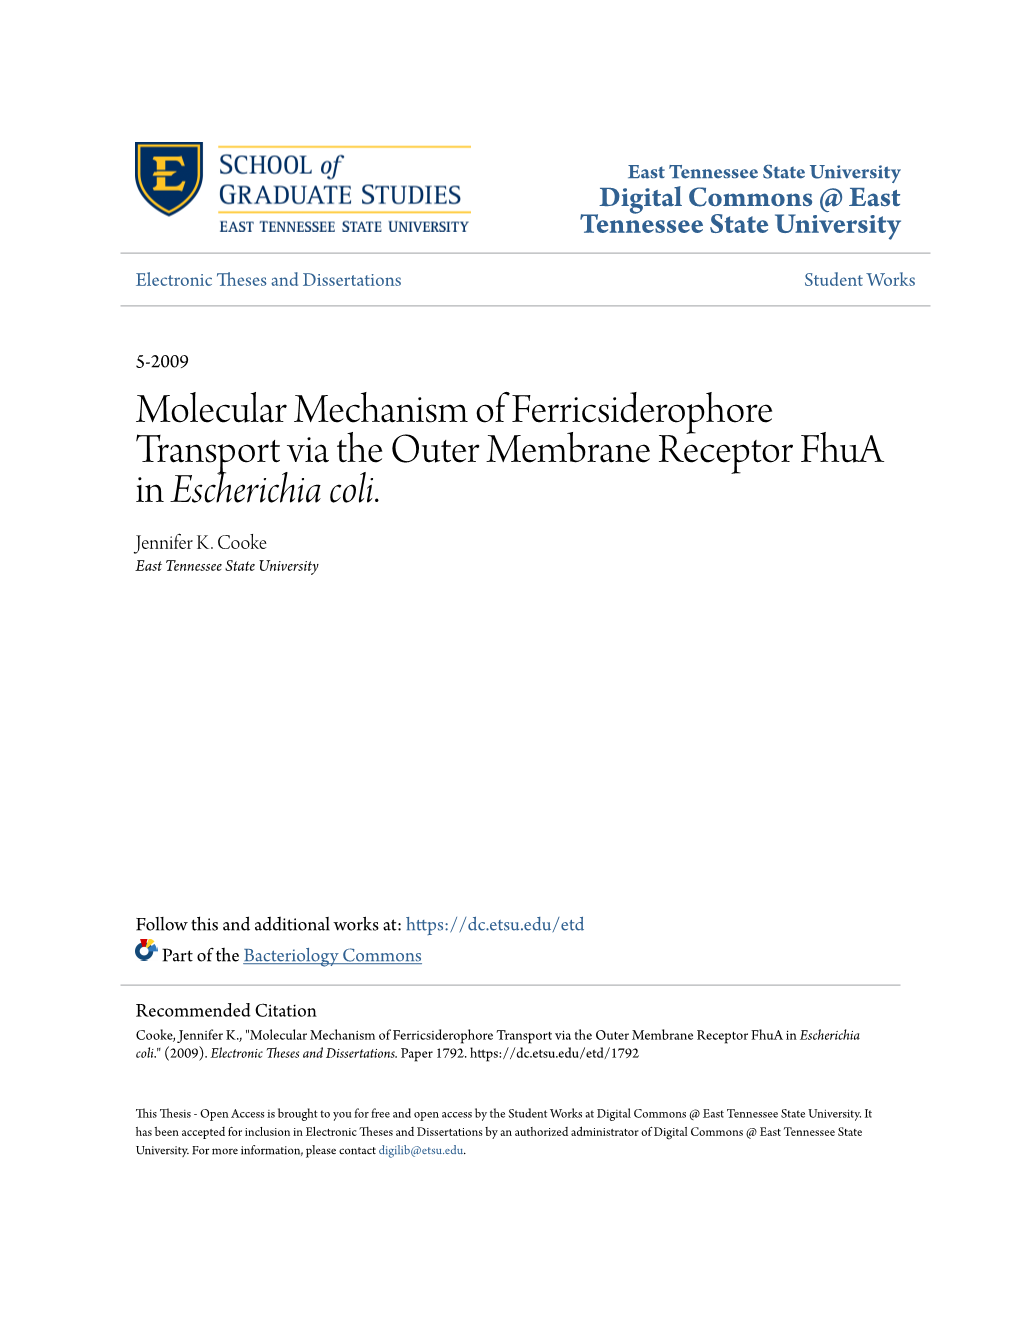 Molecular Mechanism of Ferricsiderophore Transport Via the Outer Membrane Receptor Fhua in Escherichia Coli